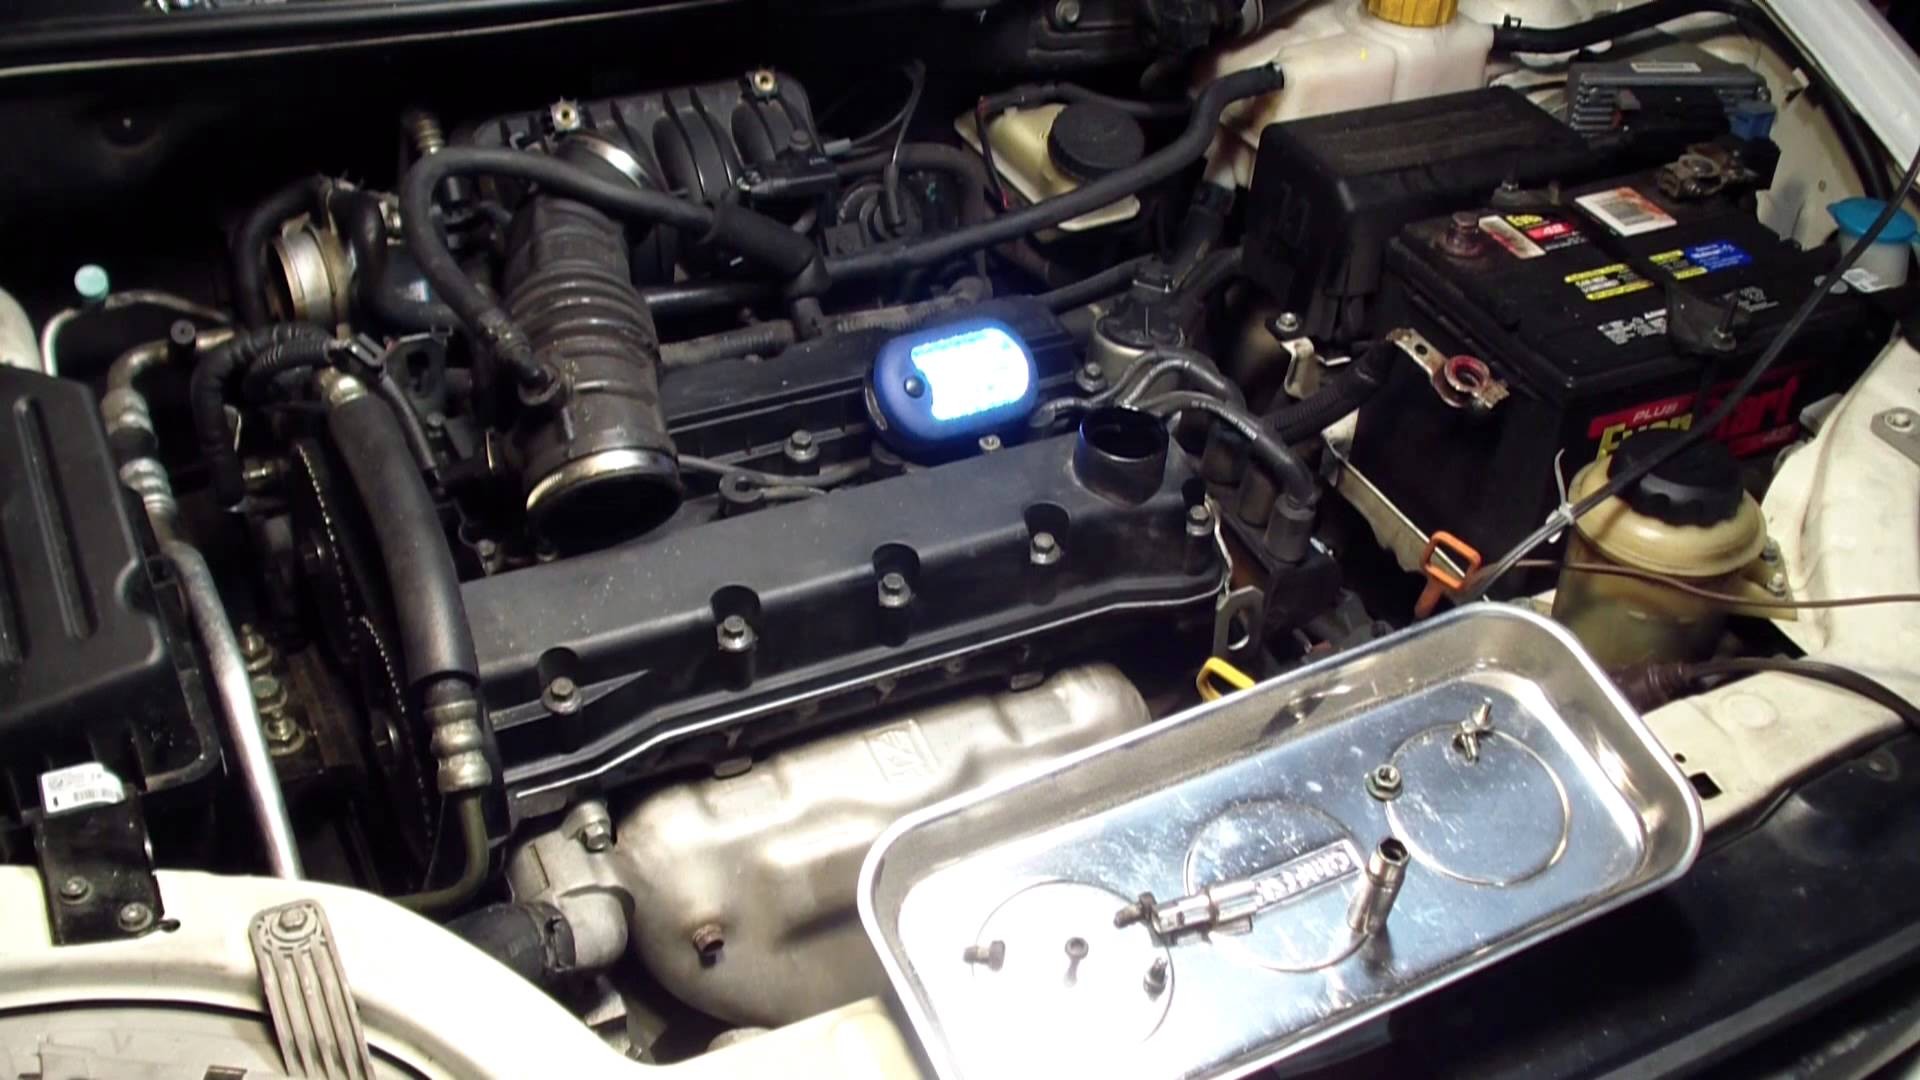 2007 Chevy Aveo Engine Diagram Replace Camshaft Position Sensor 2008 Chevrolet Aveo5 for Obd Ii Of 2007 Chevy Aveo Engine Diagram